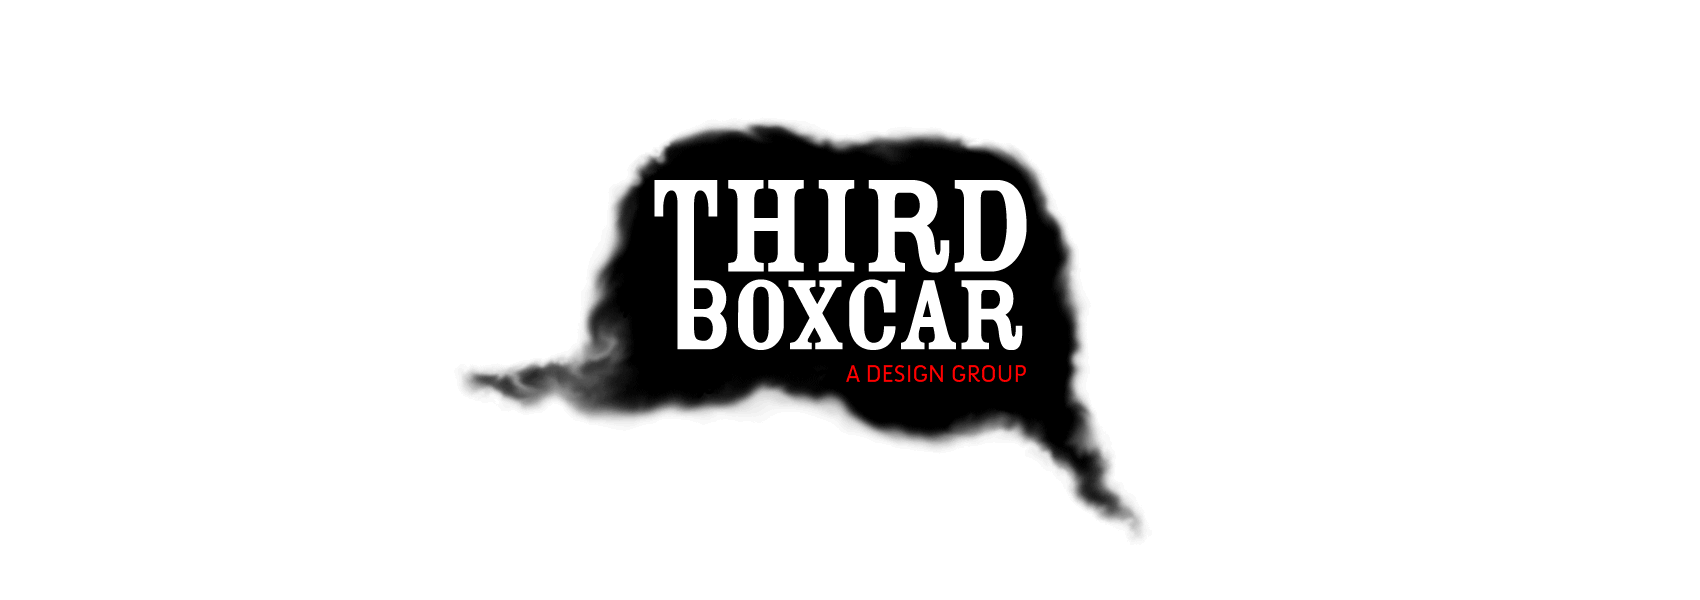 Third Boxcar - a design group